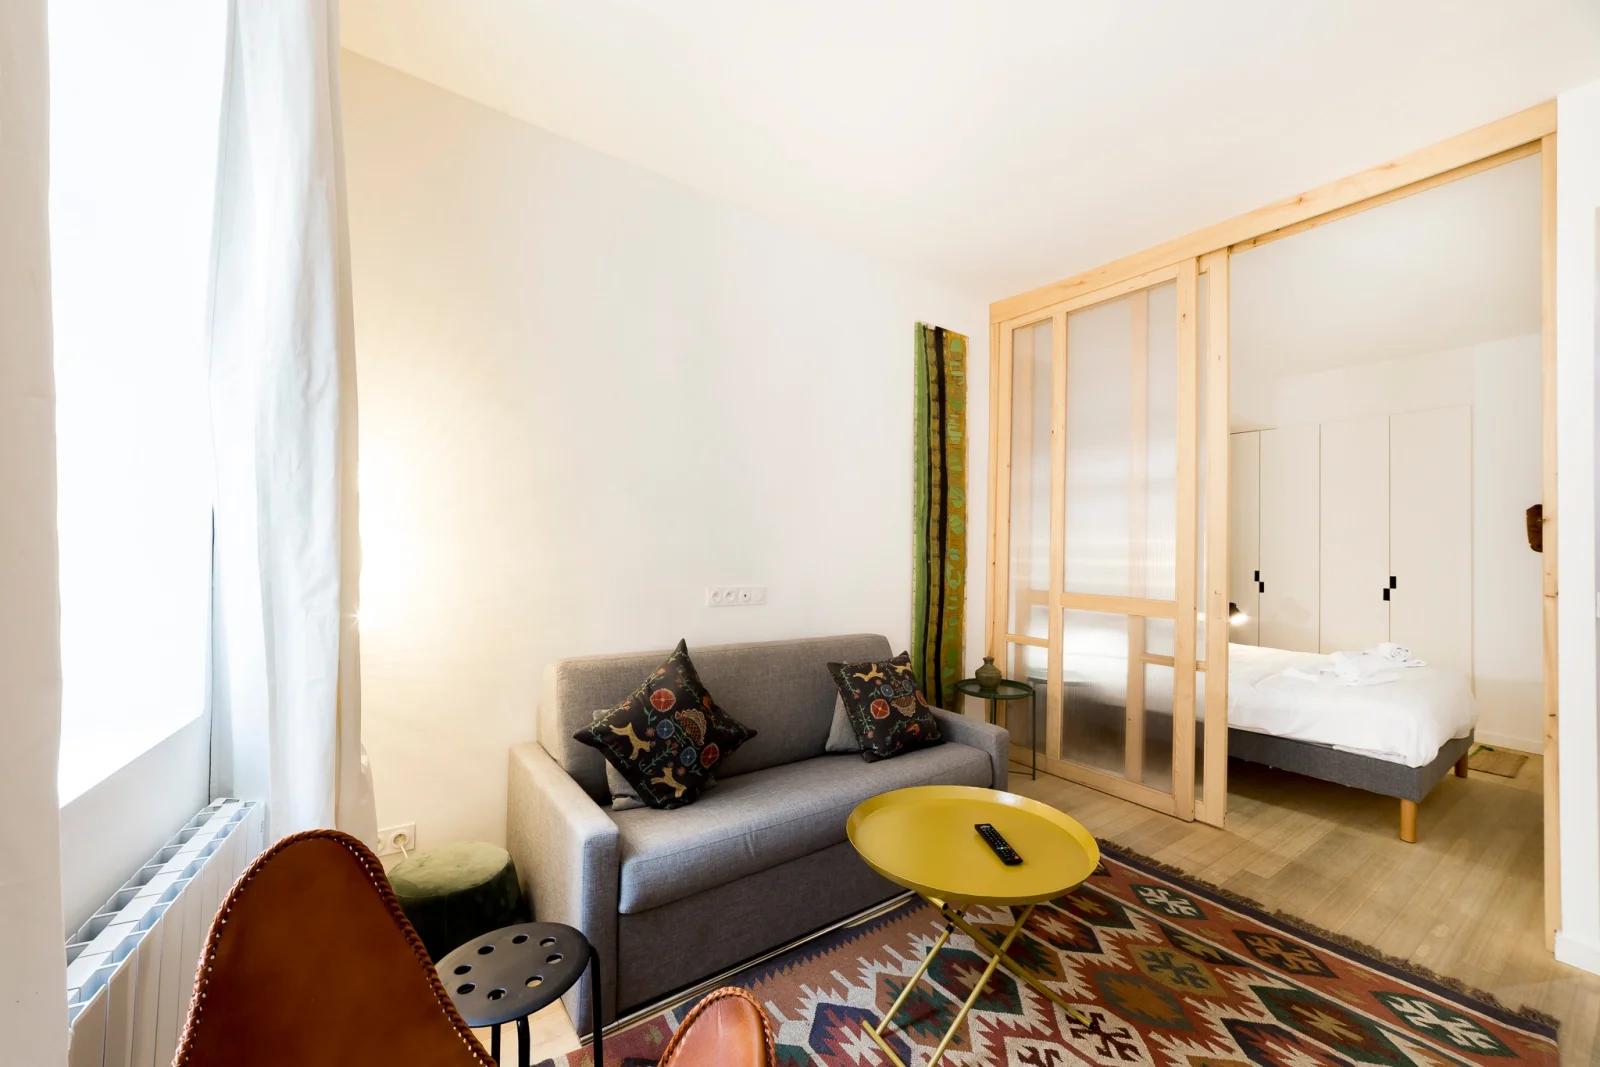 Bedroom in L'Ethnic Ambience - Comfortable venue in Vieux Lyon - 2